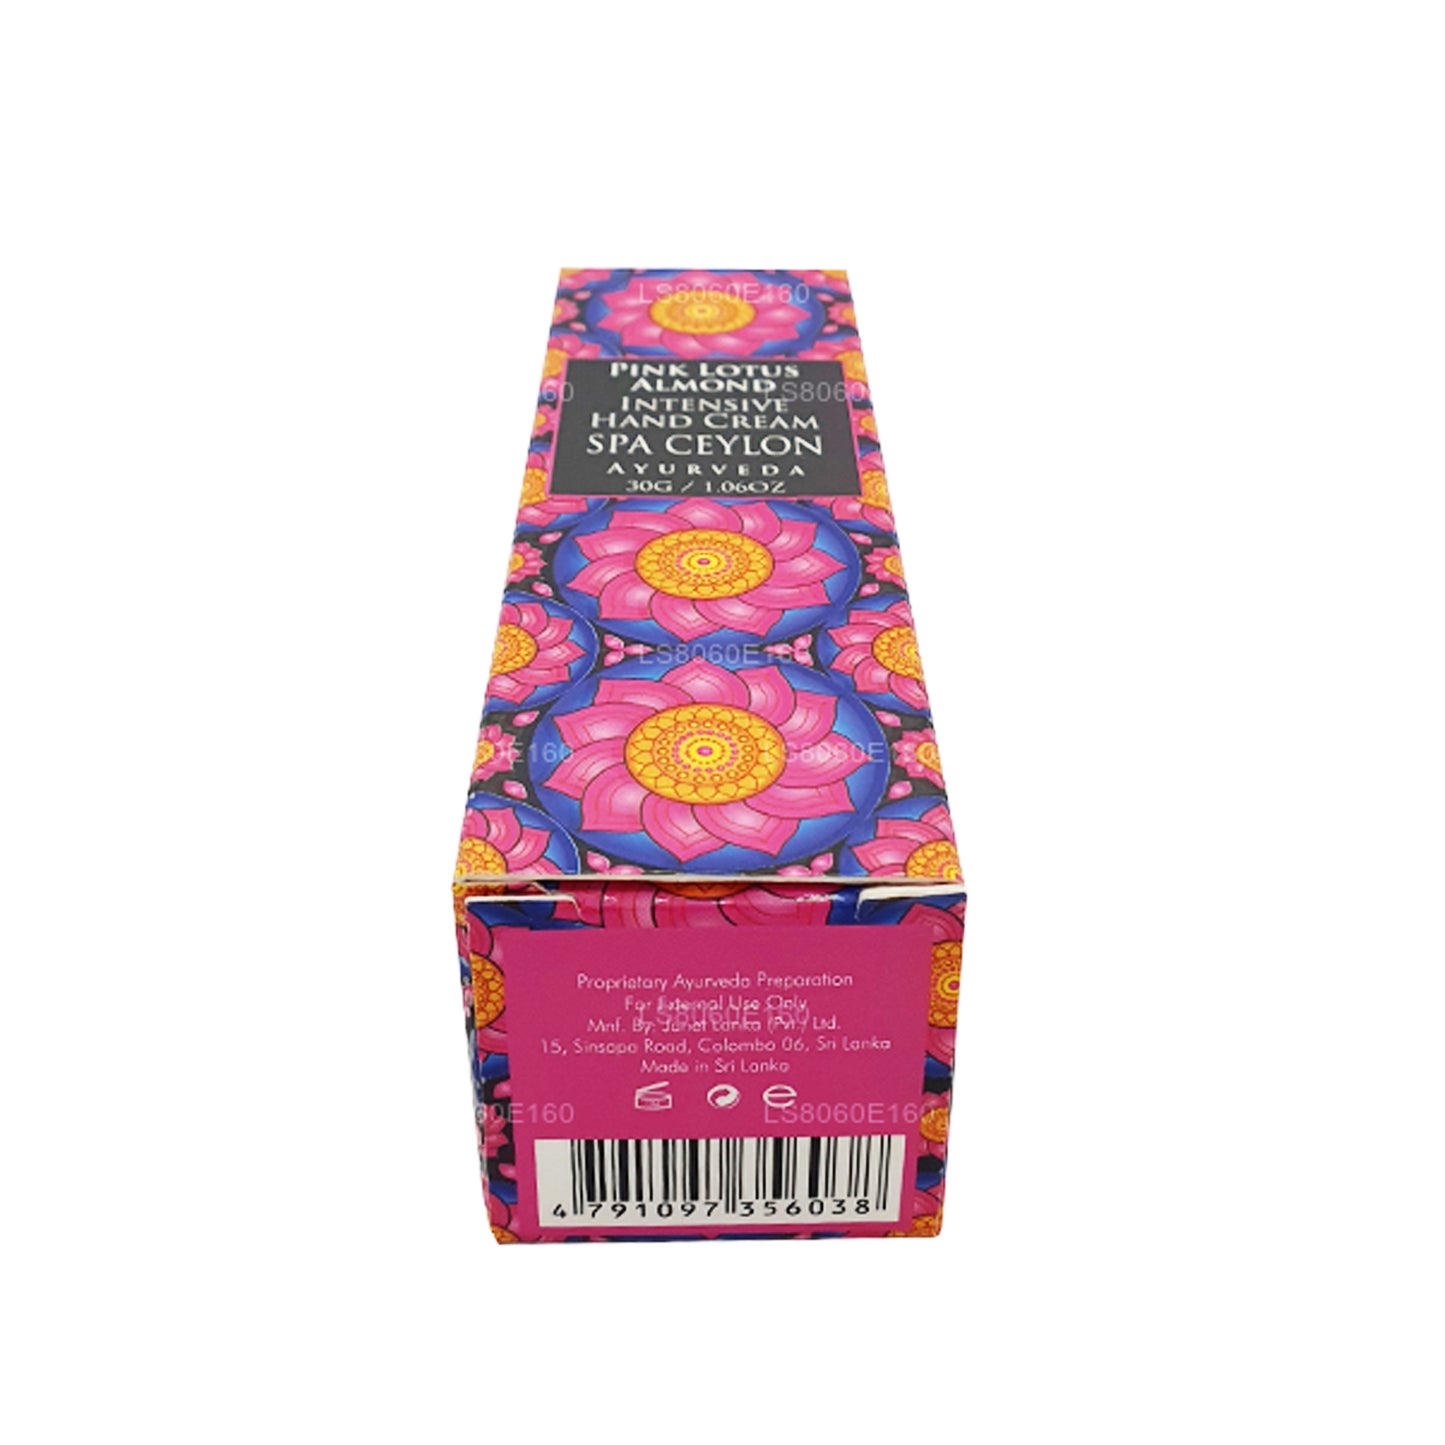 Crema de manos intensiva Spa Ceylon Pink Lotus Almond (30 g)